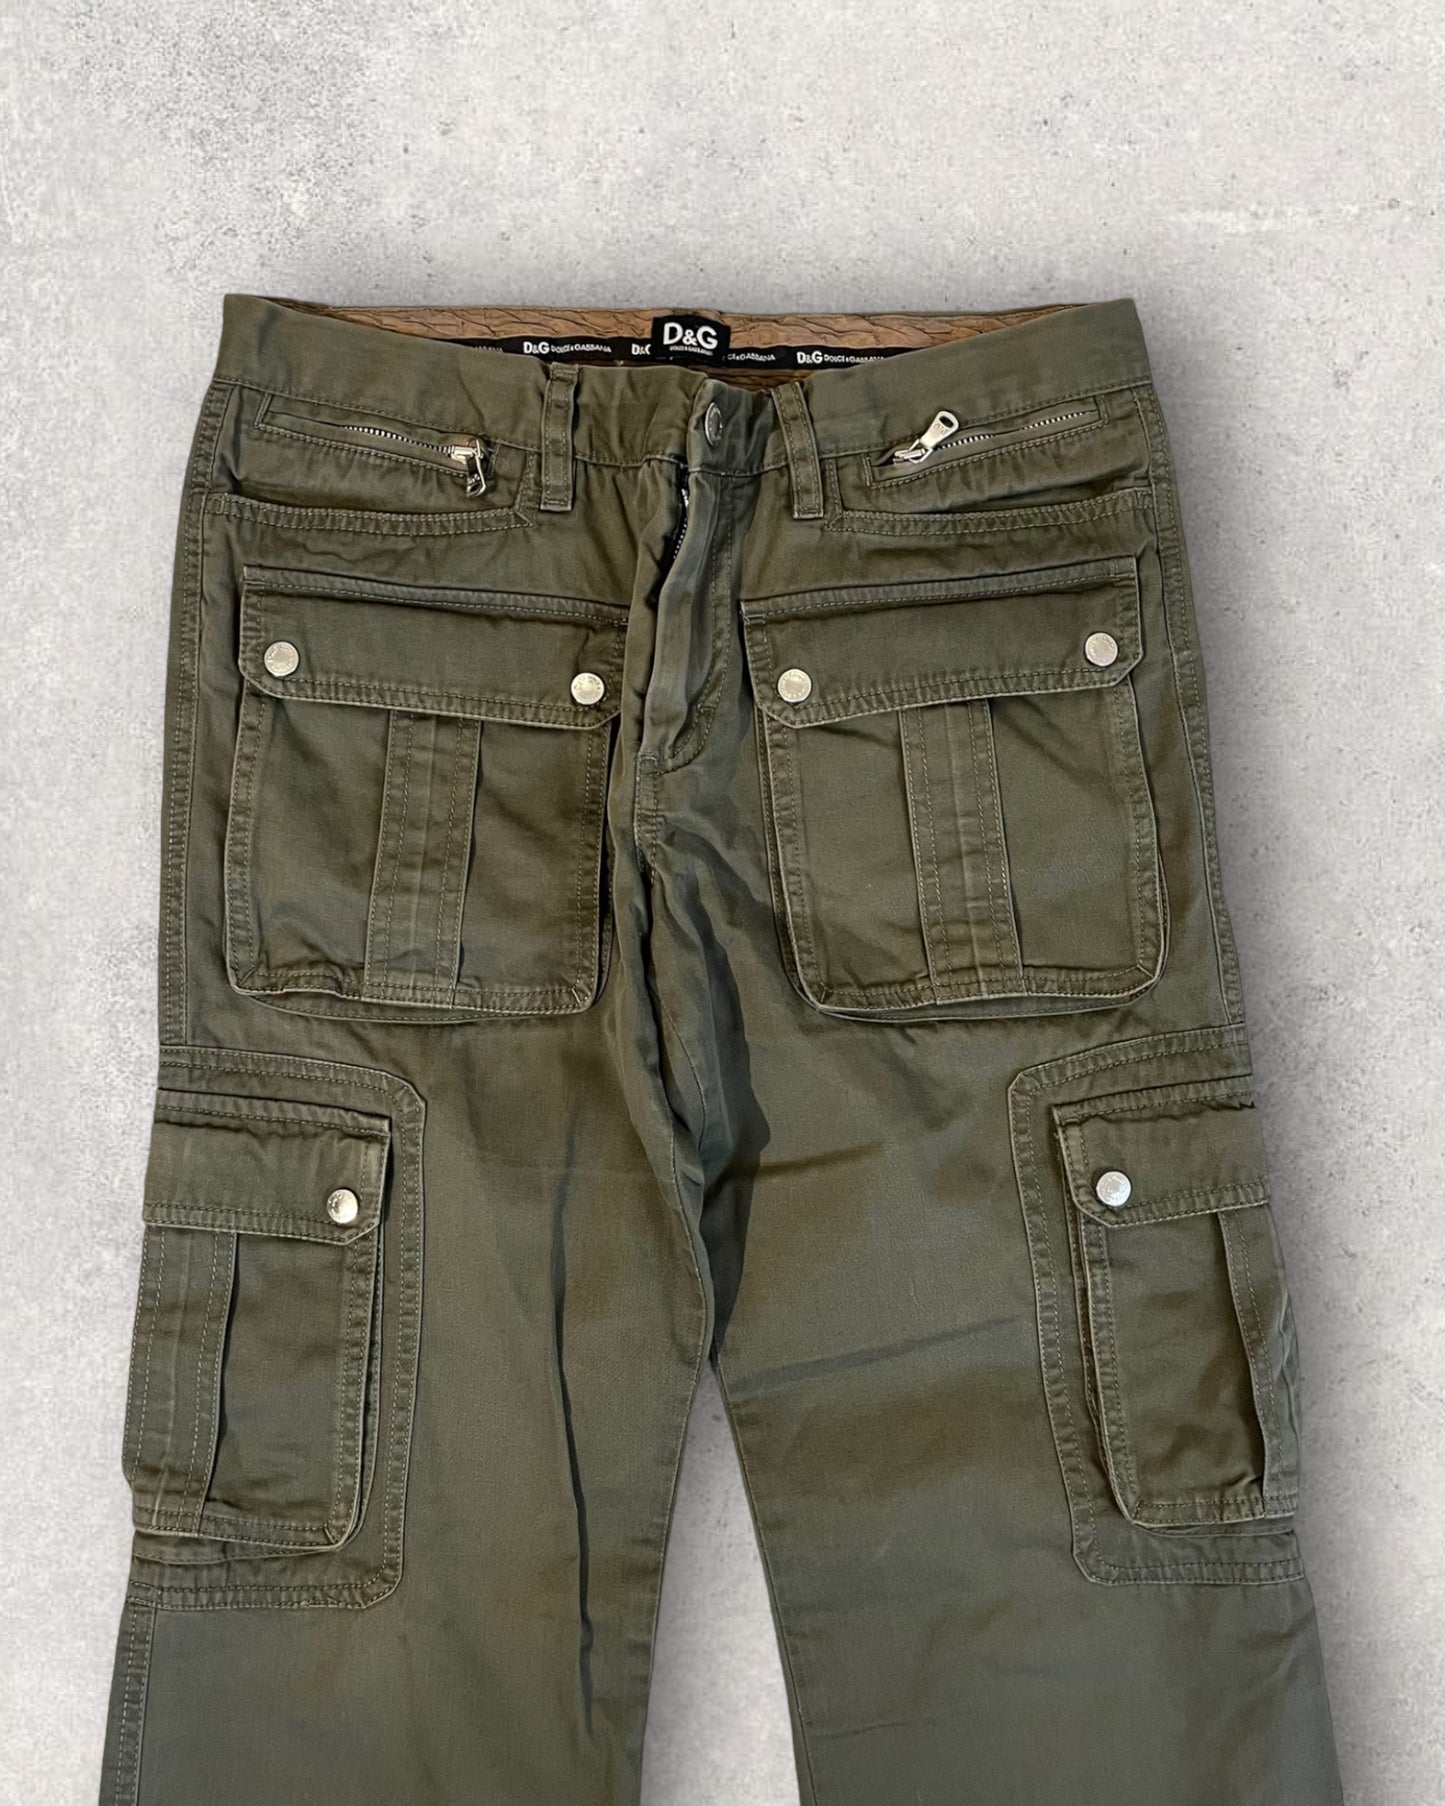 SS03 Dolce & Gabbana Combat Cargo Pants (S)